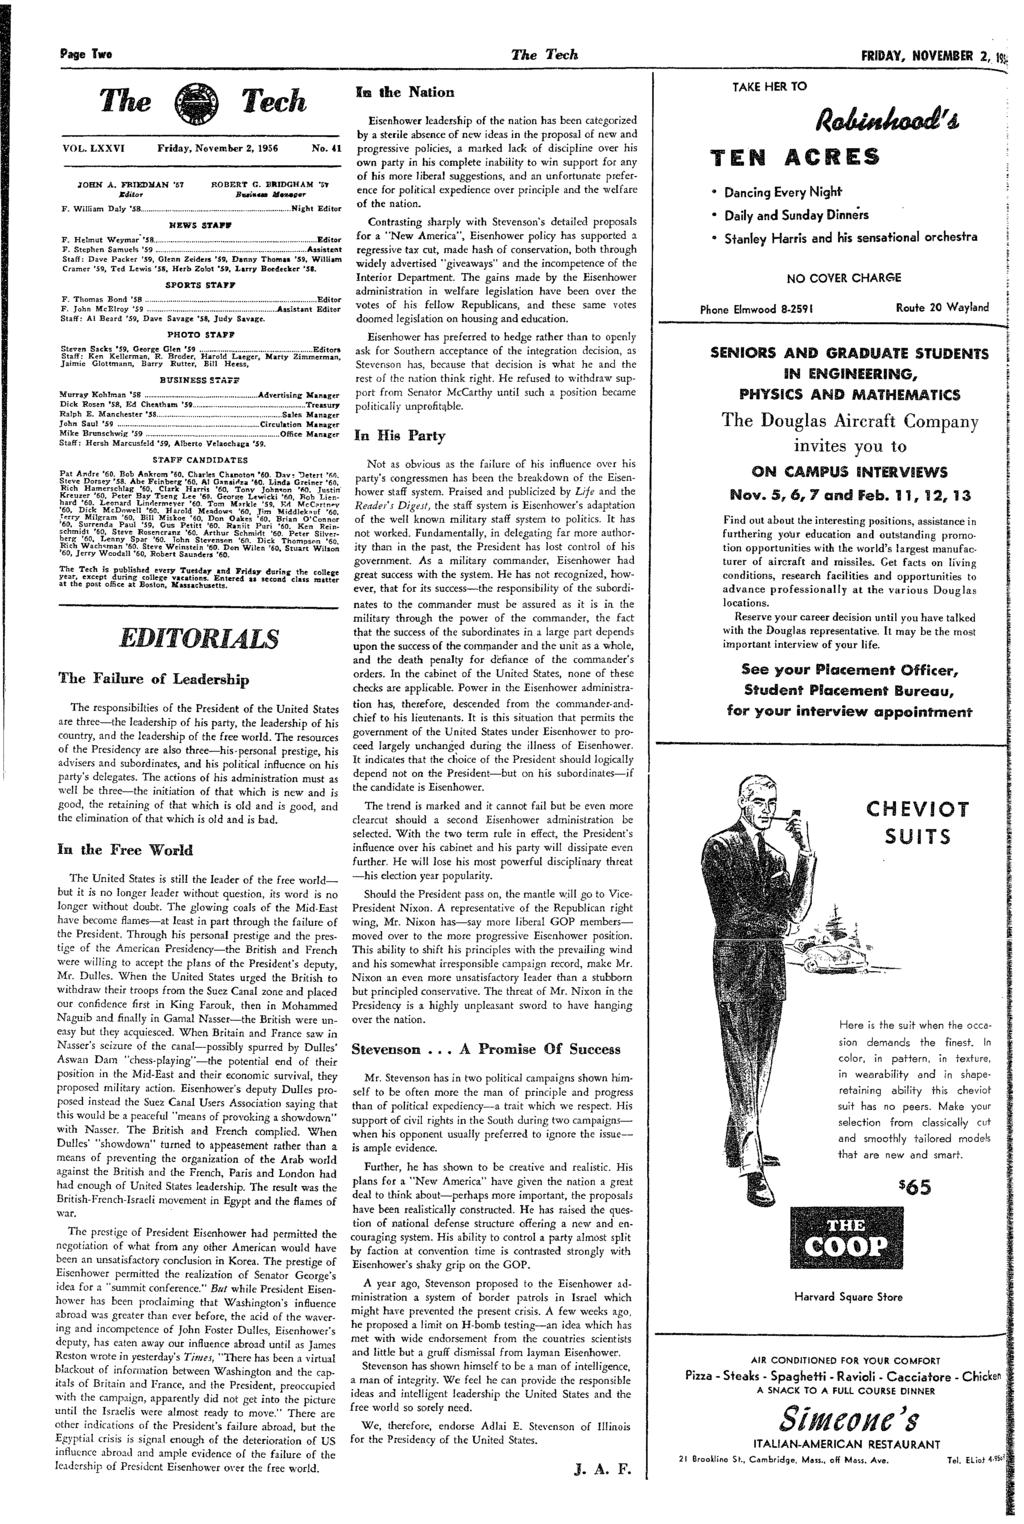 Page Two The qr VOL. LXXV Frday, November 2, 1956 No. 41 JOHN A. FREDMAN '57 ROBERT G. BRDGHAM V5r Edtor Bwsewm Me'ver F. W am D ay '58... N ght Edtor NEWS STAFF Pf. H em ut W eym ar '58... Edtor };.